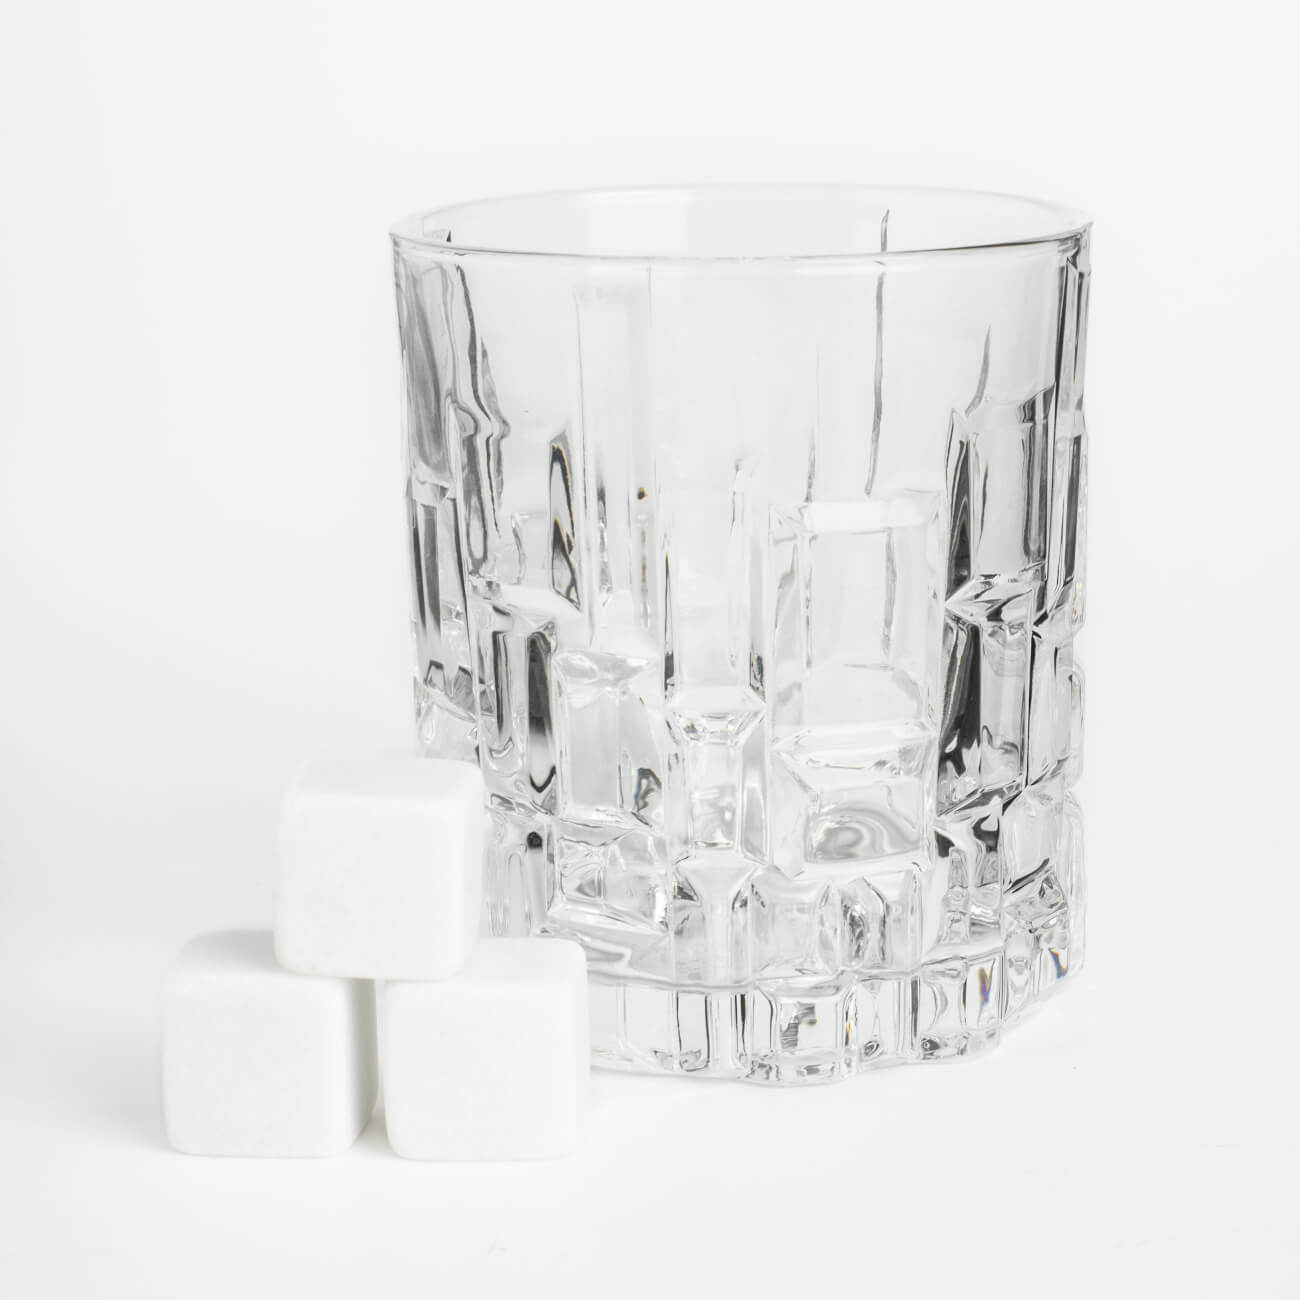 Набор для виски, 1 перс, 4 пр, стакан/кубики, стекло Р/мрамор, Mosaic набор для виски 2 перс 6 пр стаканы кубики стекло стеатит кракелюр ice